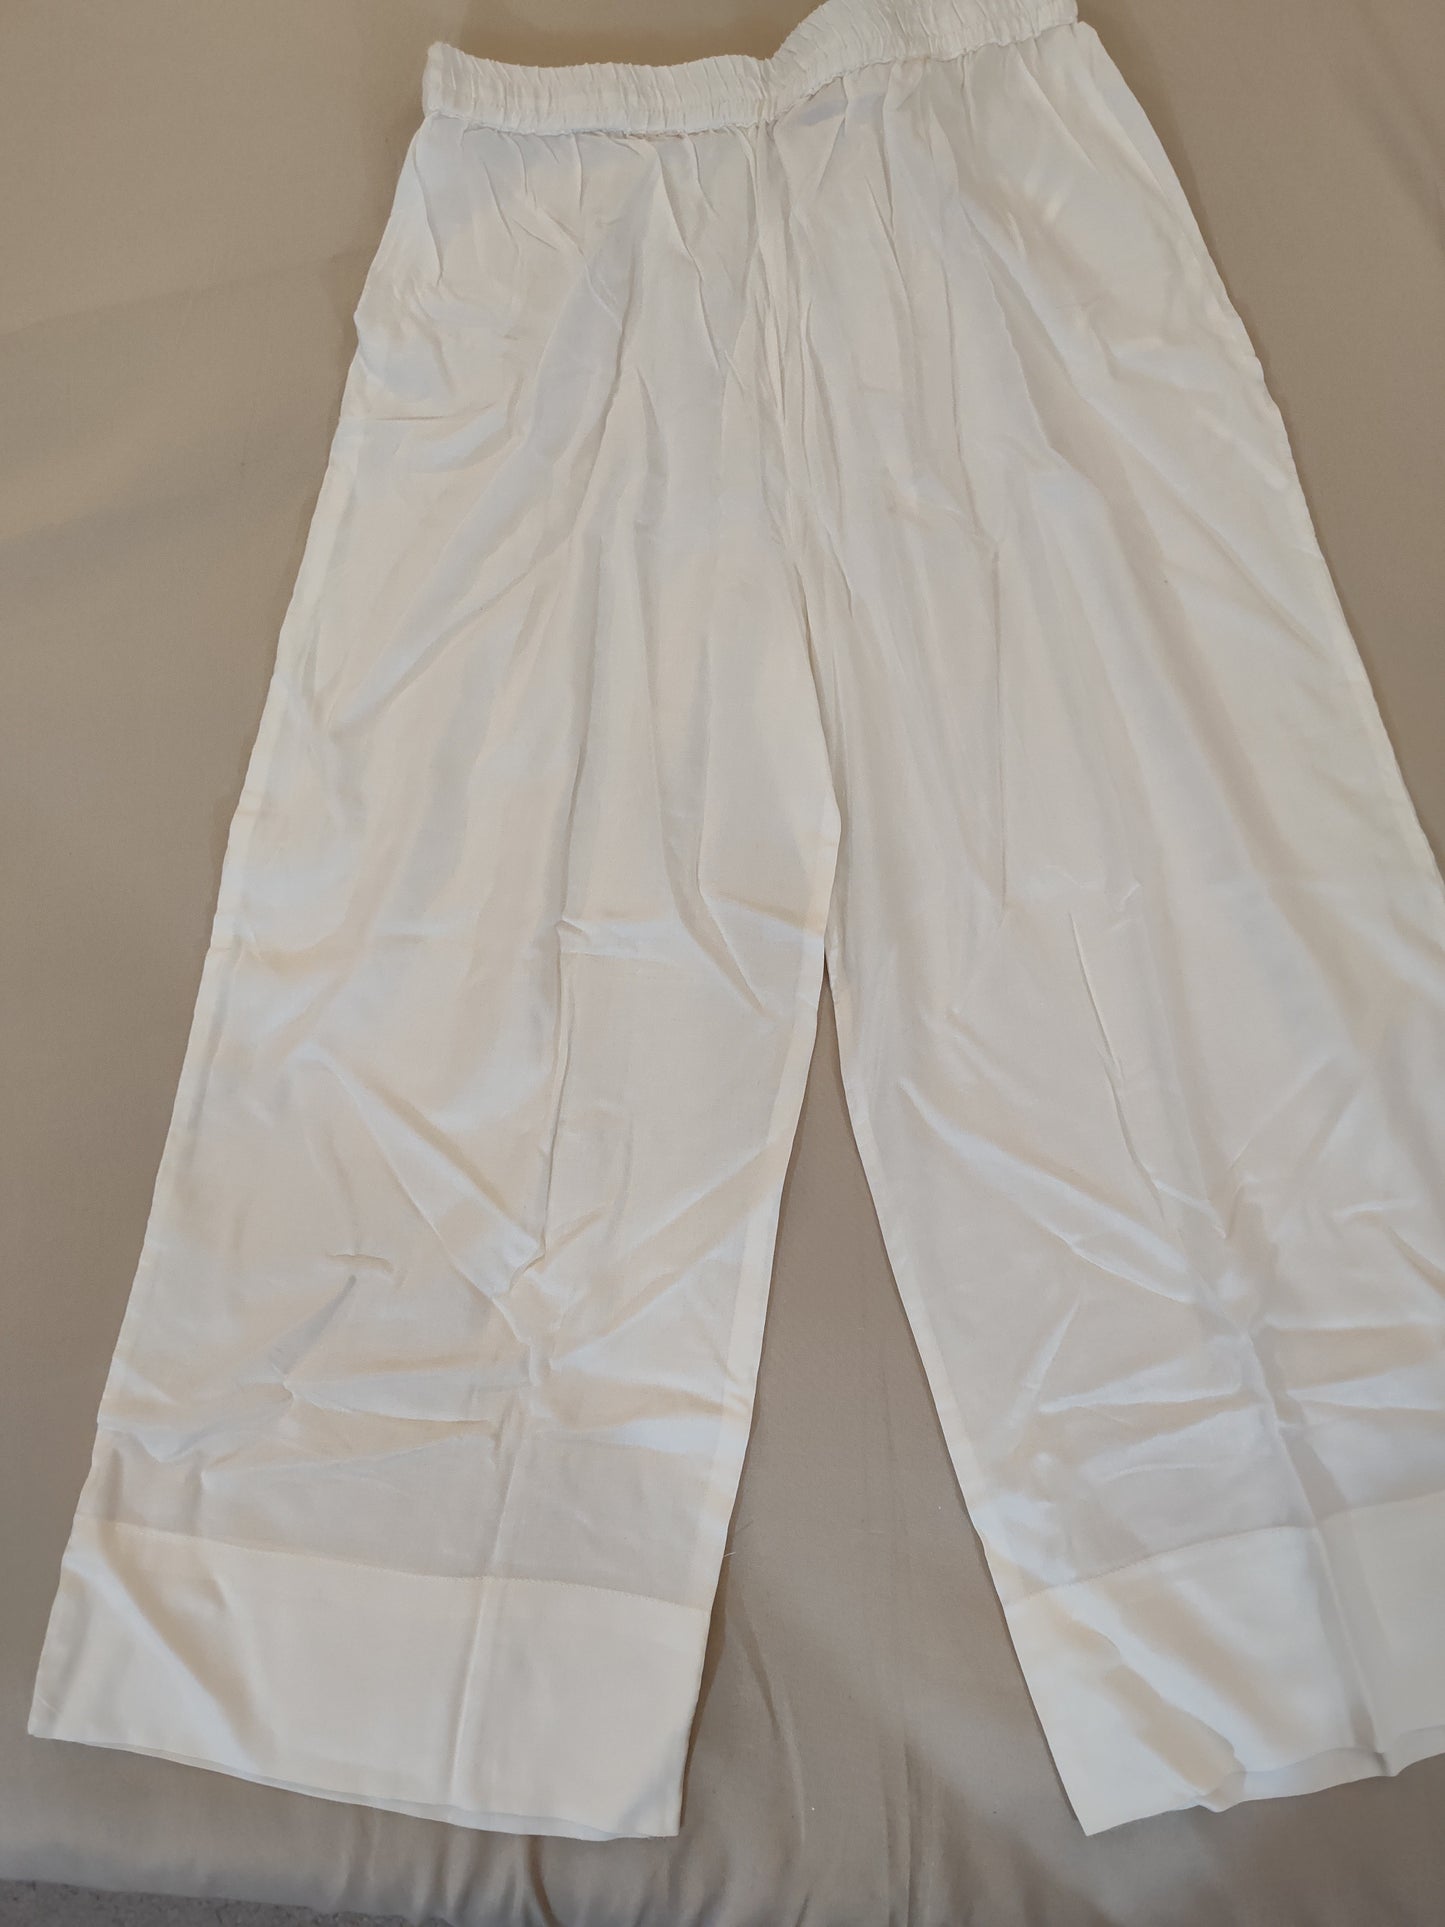 Appealing Plain Cotton White Palazzo Pants For Women